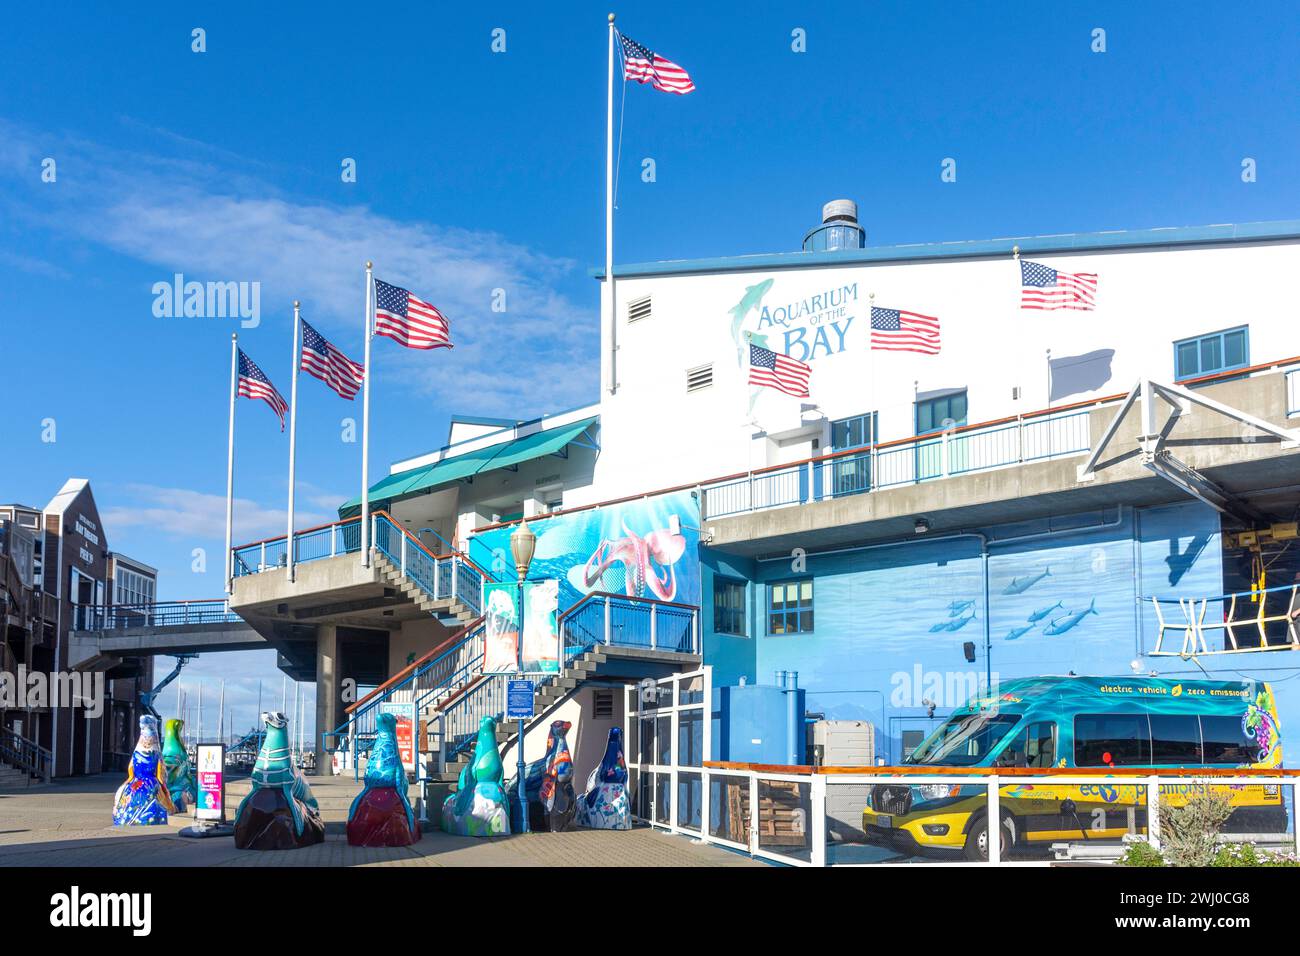 Aquarium of the Bay attraction, Pier 39, Fisherman's Wharf District, San Francisco, California, United States Stock Photo